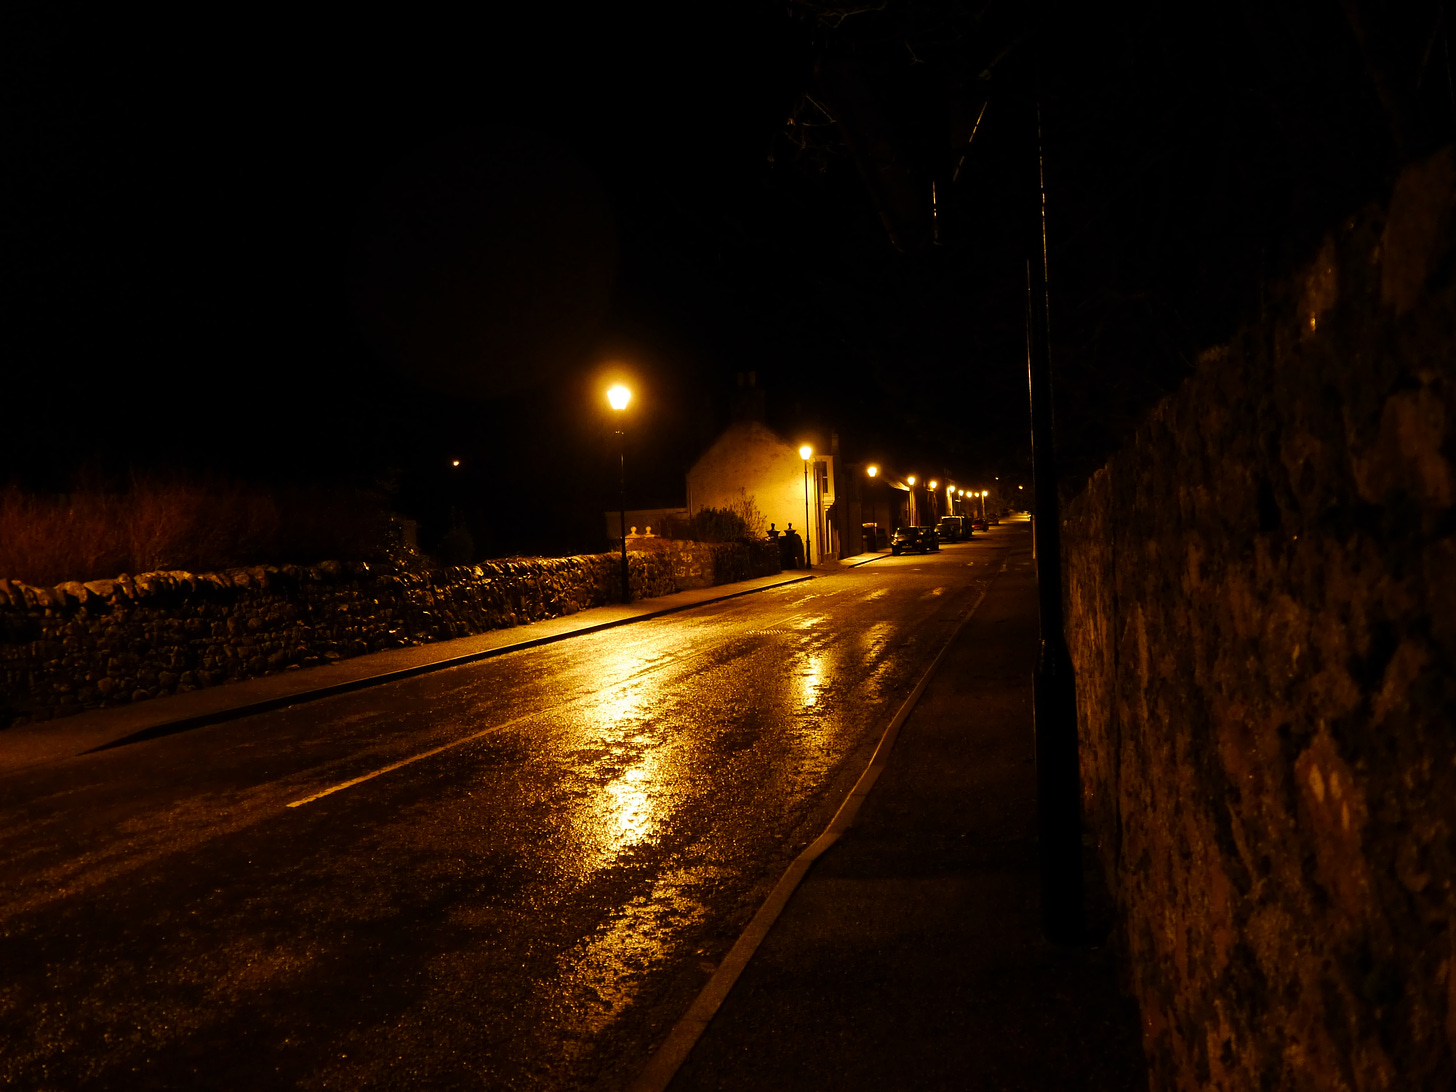 A dark street lit by orange streetlights